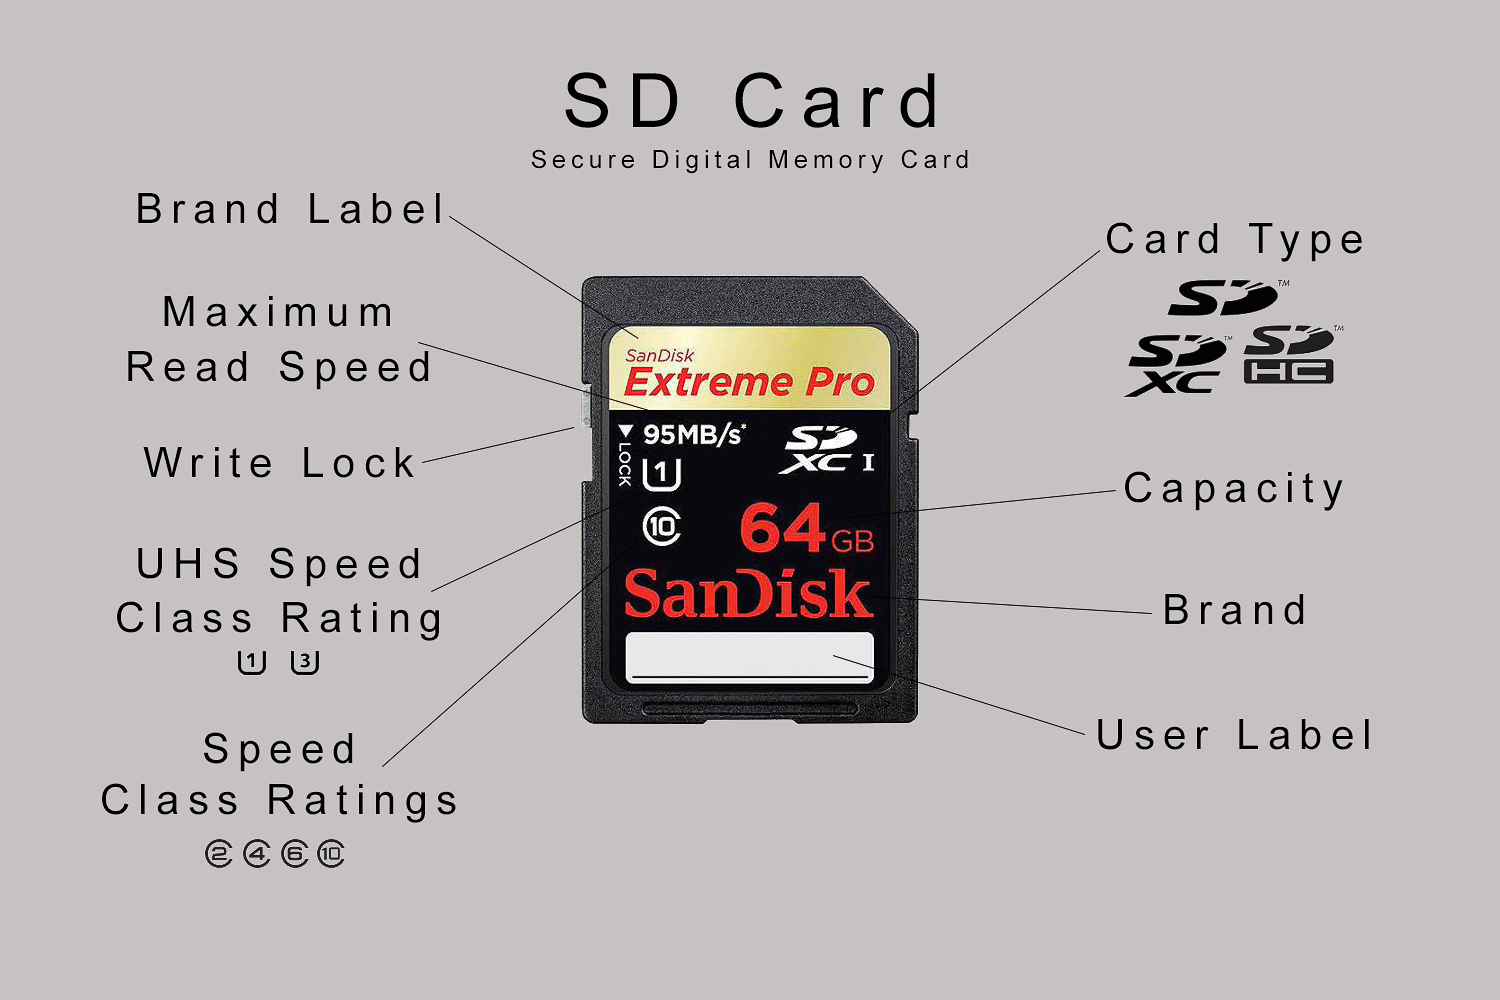 sd association sd memory card formatter